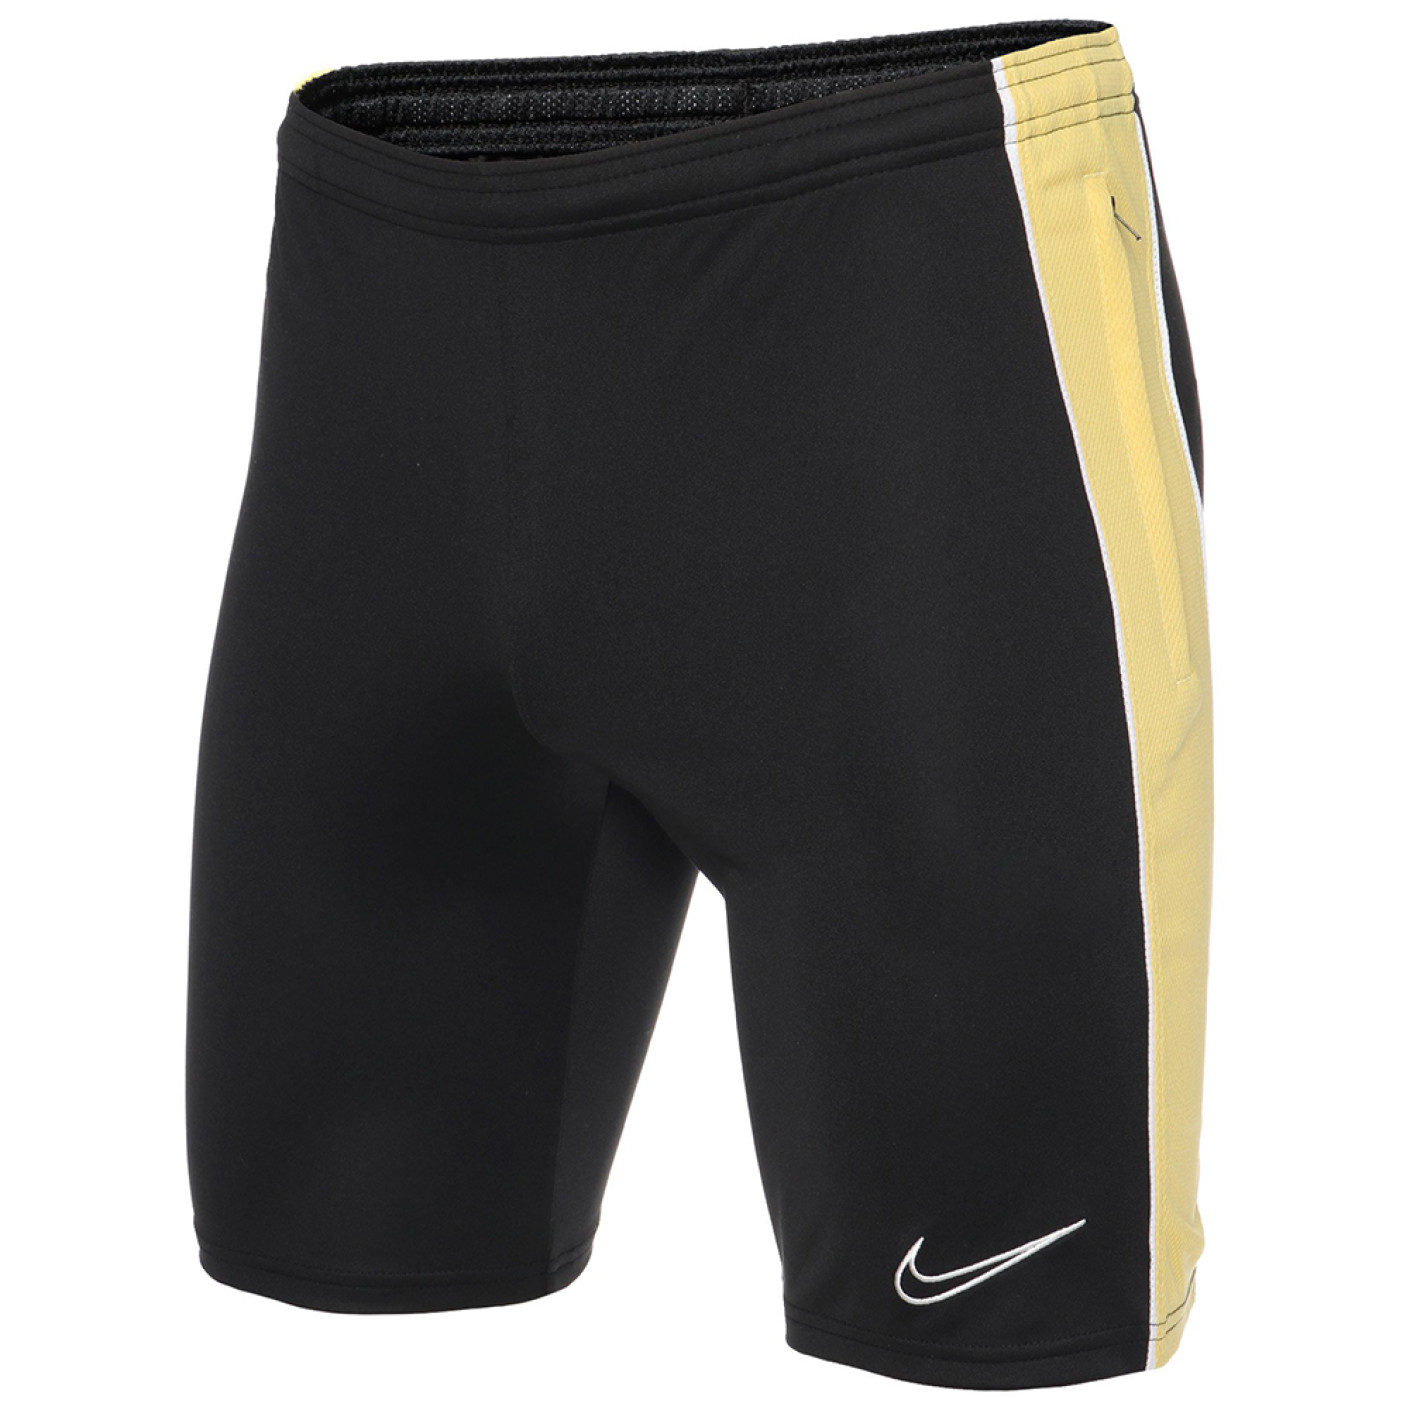 Nike Dry Academy Training Short Black Gold White